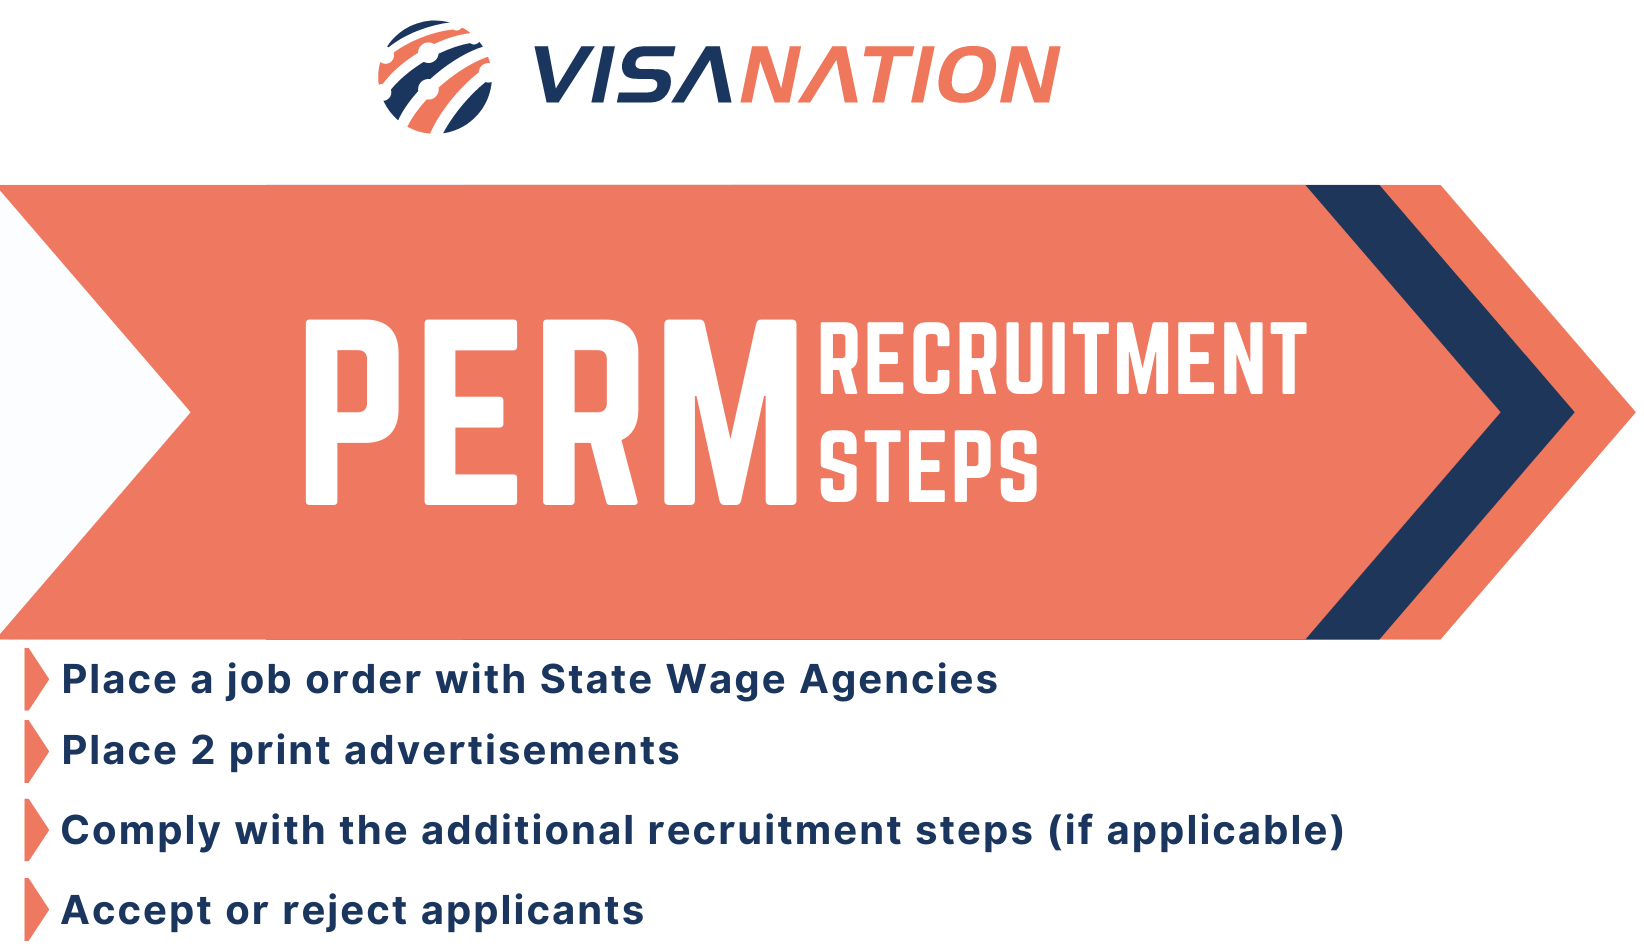 PERM Recruitment Period, Application Process, and Regulations